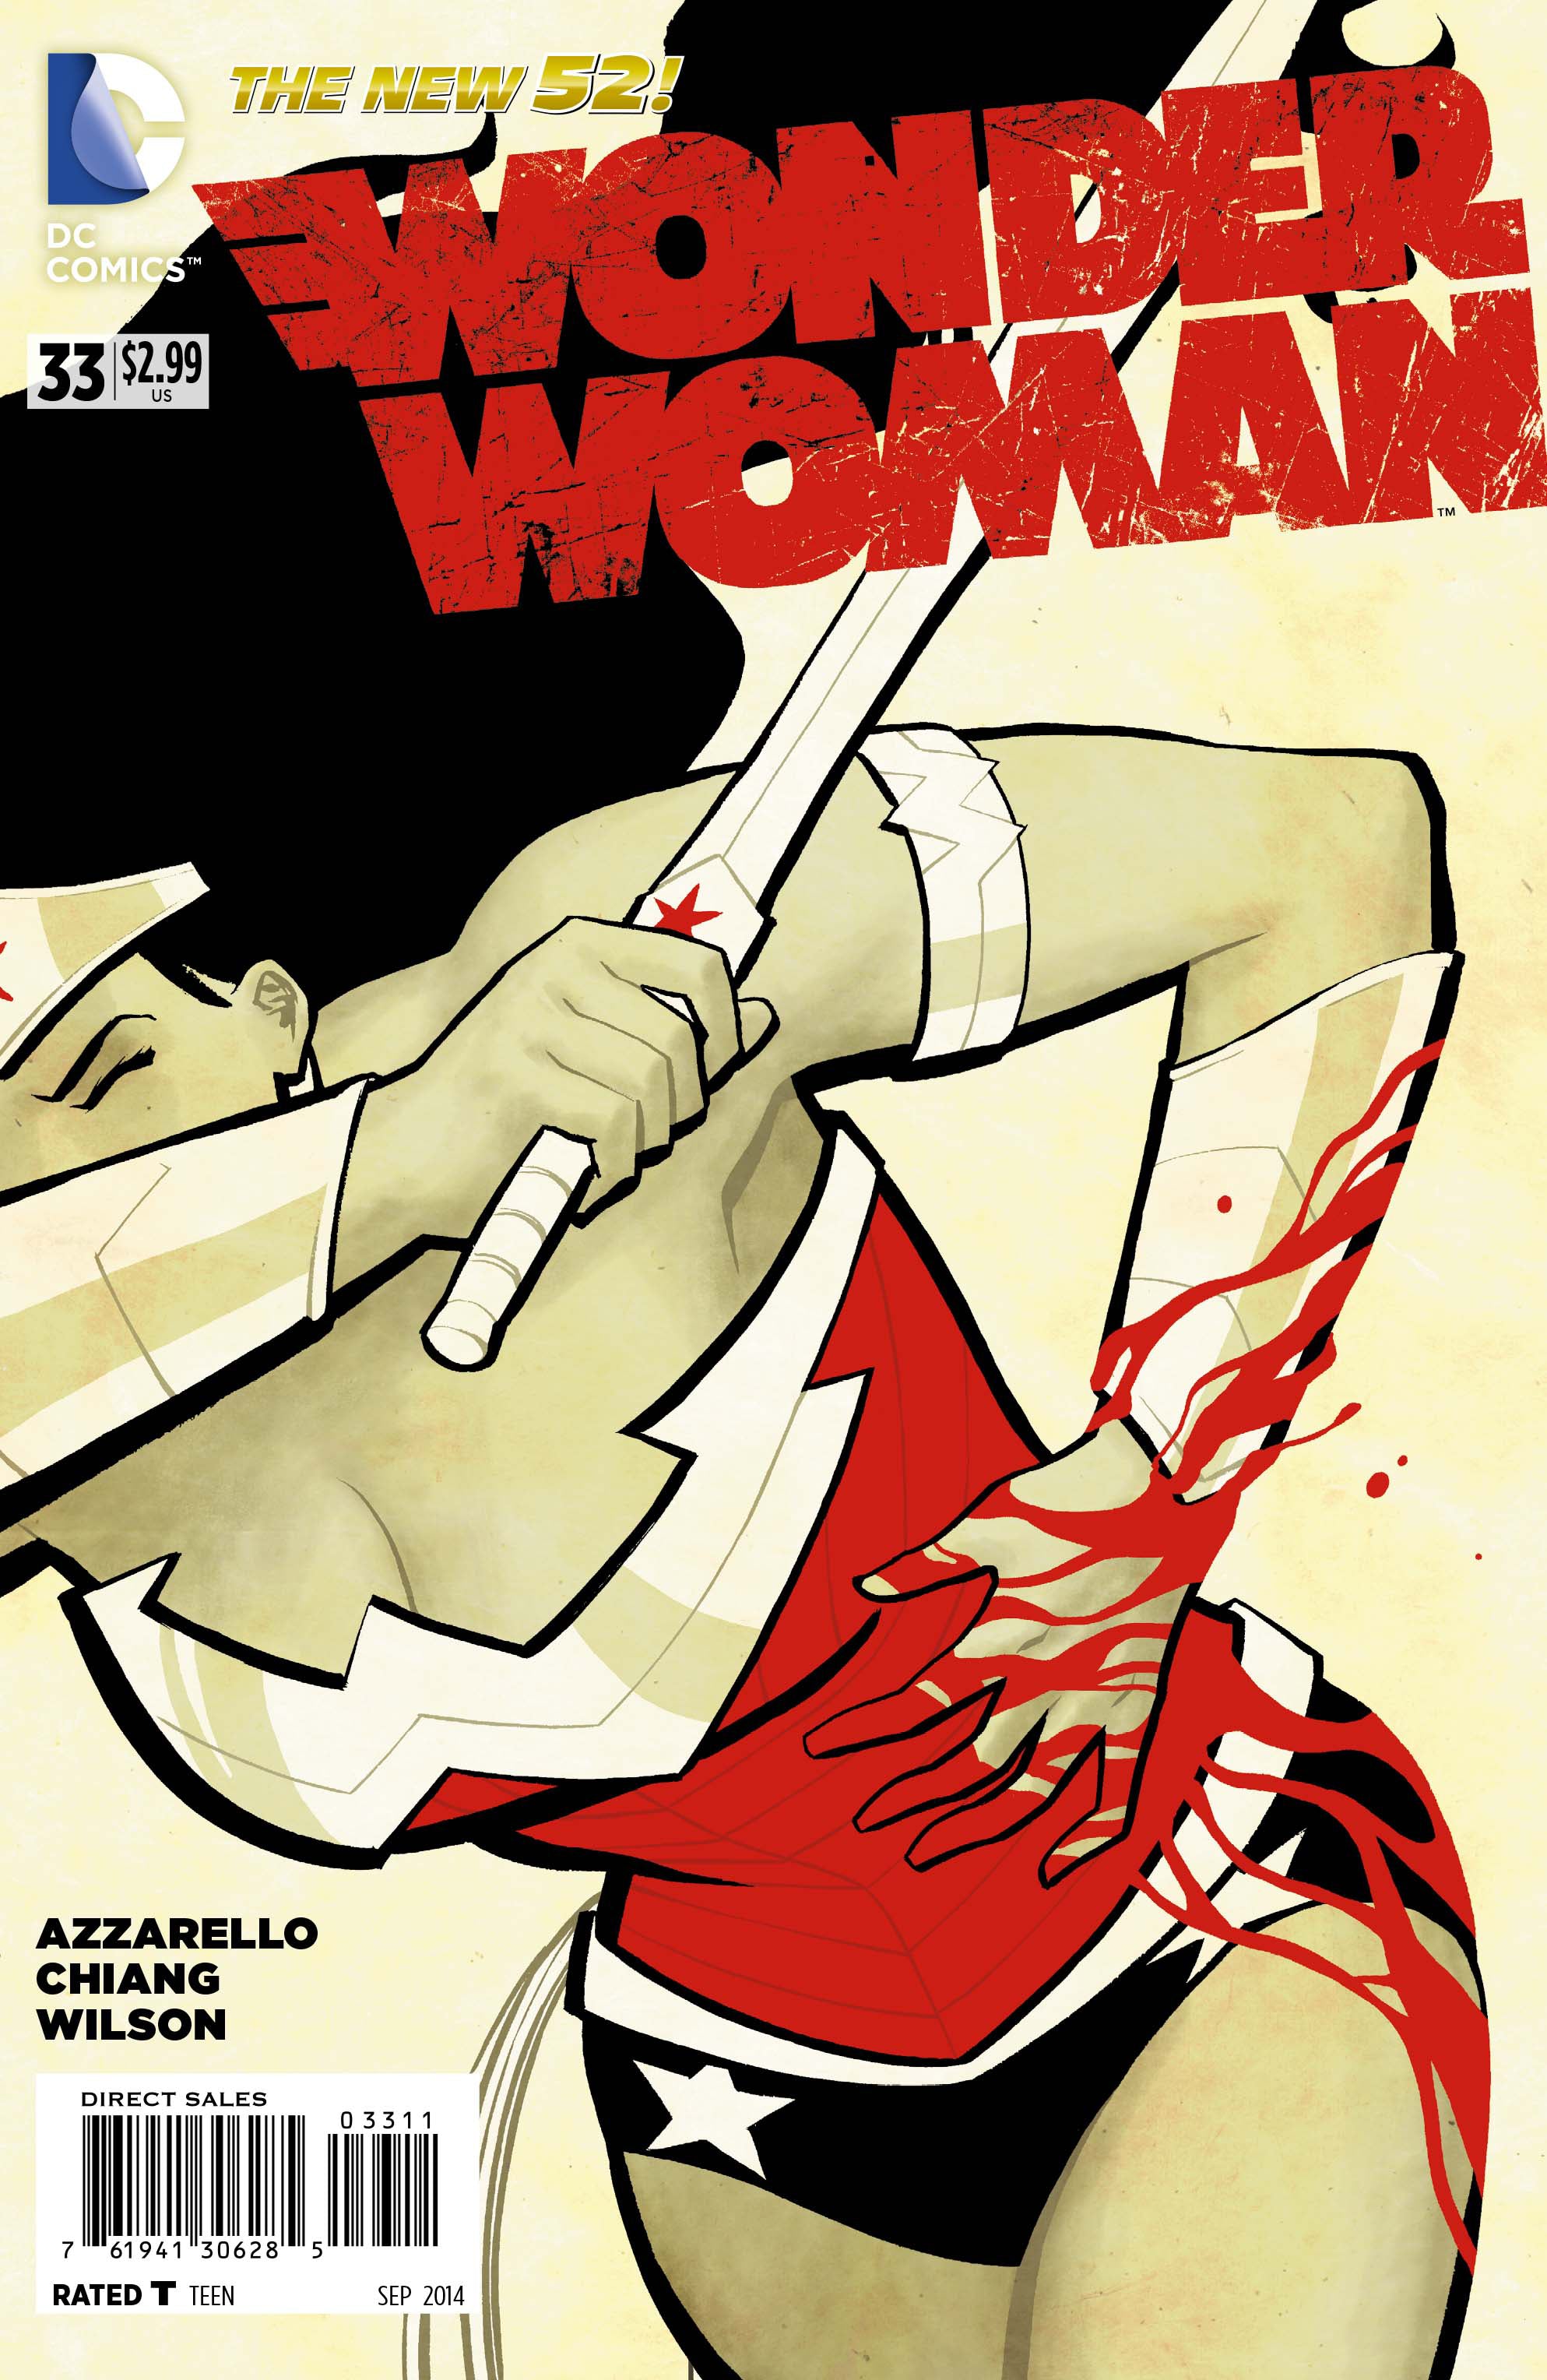 WONDER WOMAN Vol 4 #33 | Game Master's Emporium (The New GME)